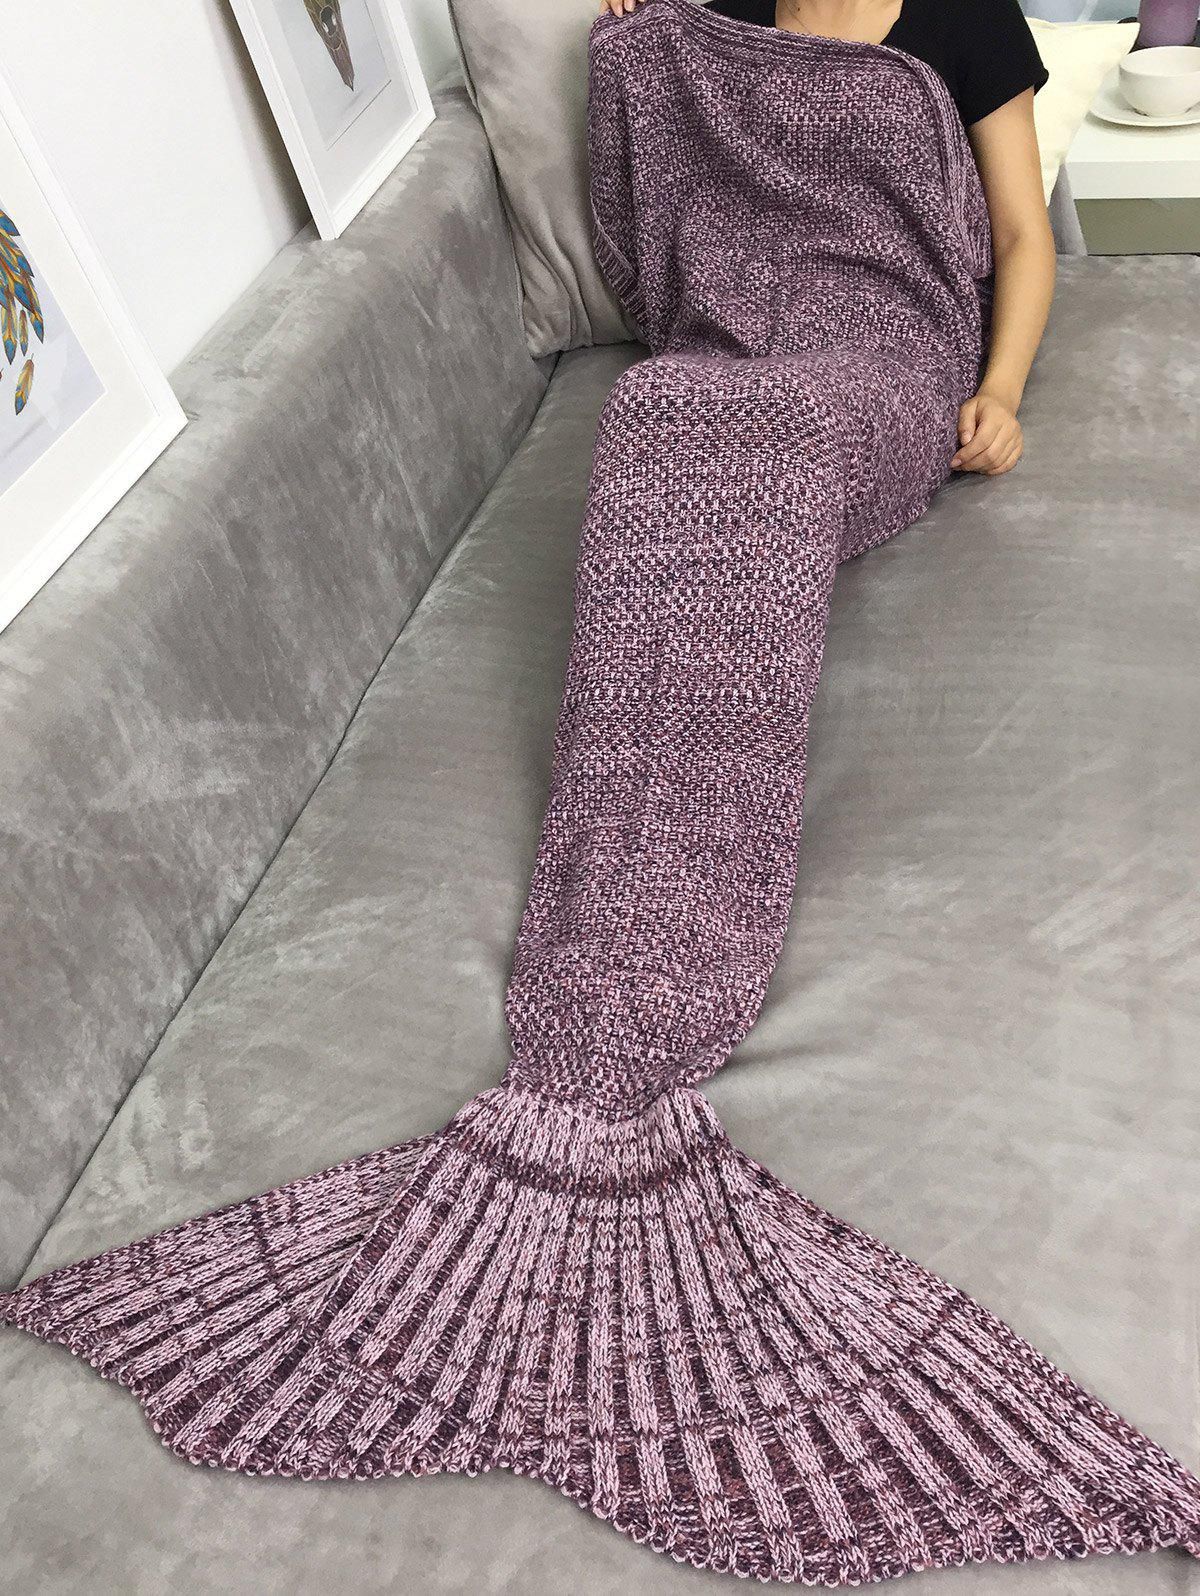 Thicken Crochet Sofa Bed Sleeping Bag Wrap Mermaid Blanket